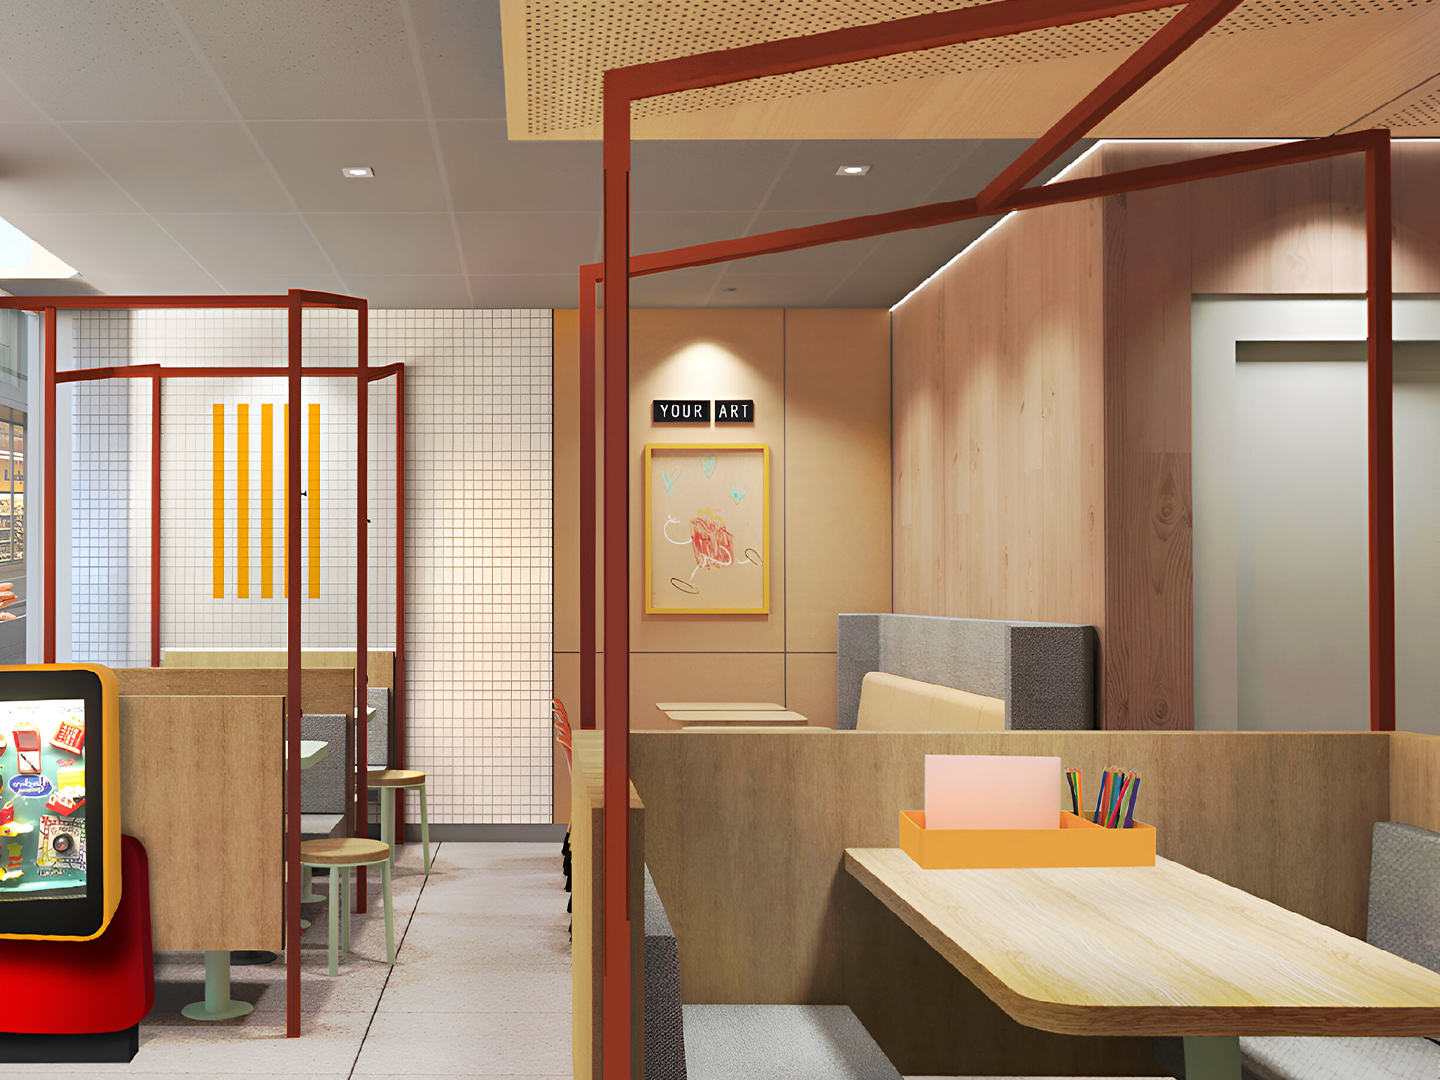 Restaurant Design - Custom Restaurant Furniture - McDonald's Human Comfort - Custom Fixtures - Custom Furniture - Restaurant Industry